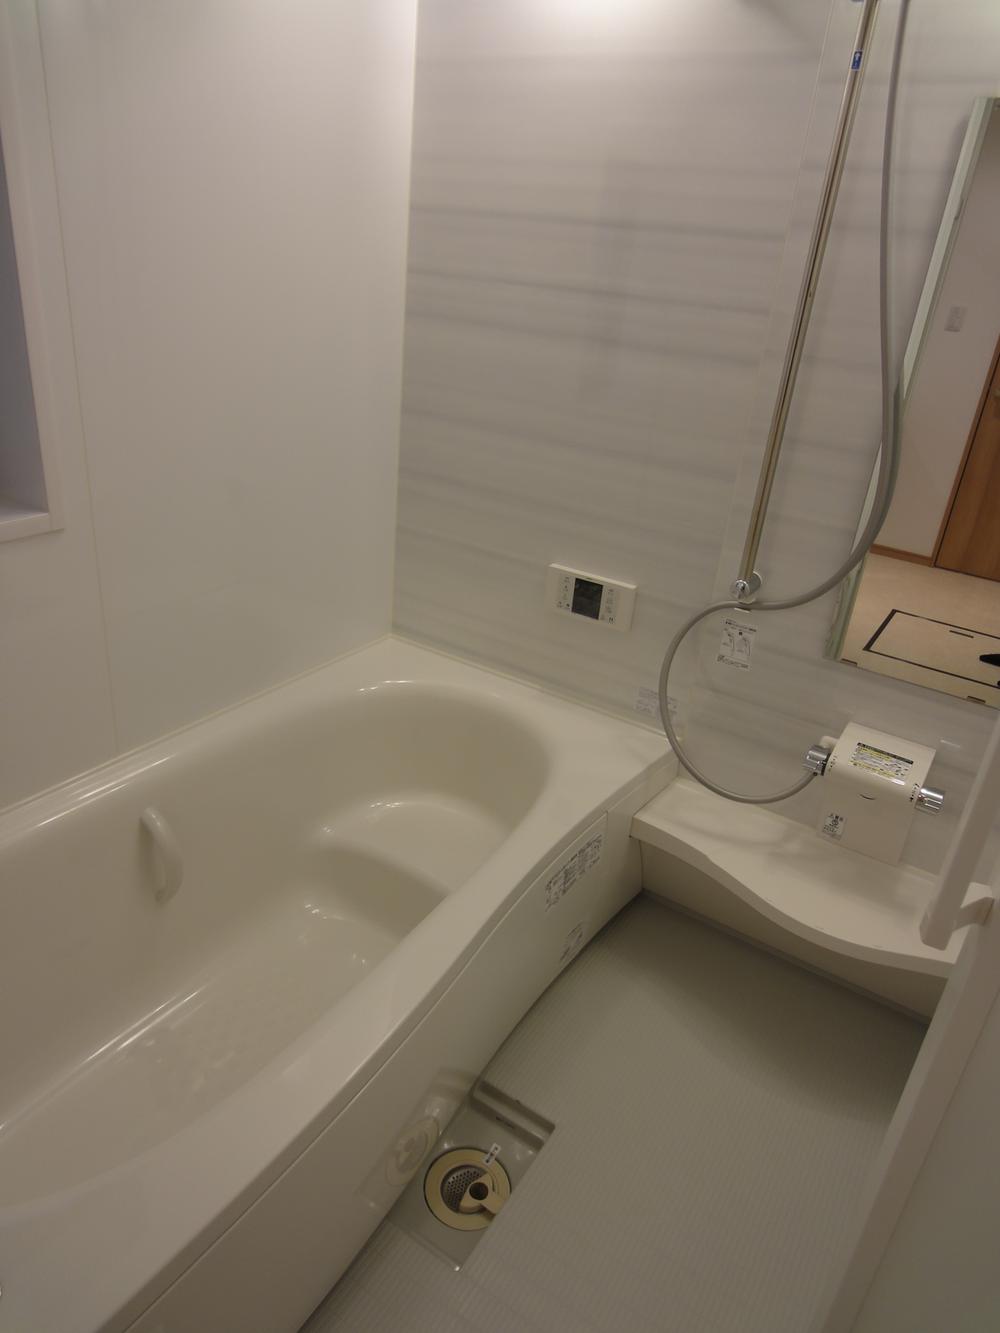 Bathroom. Hitotsubo bath in the bathroom drying function with